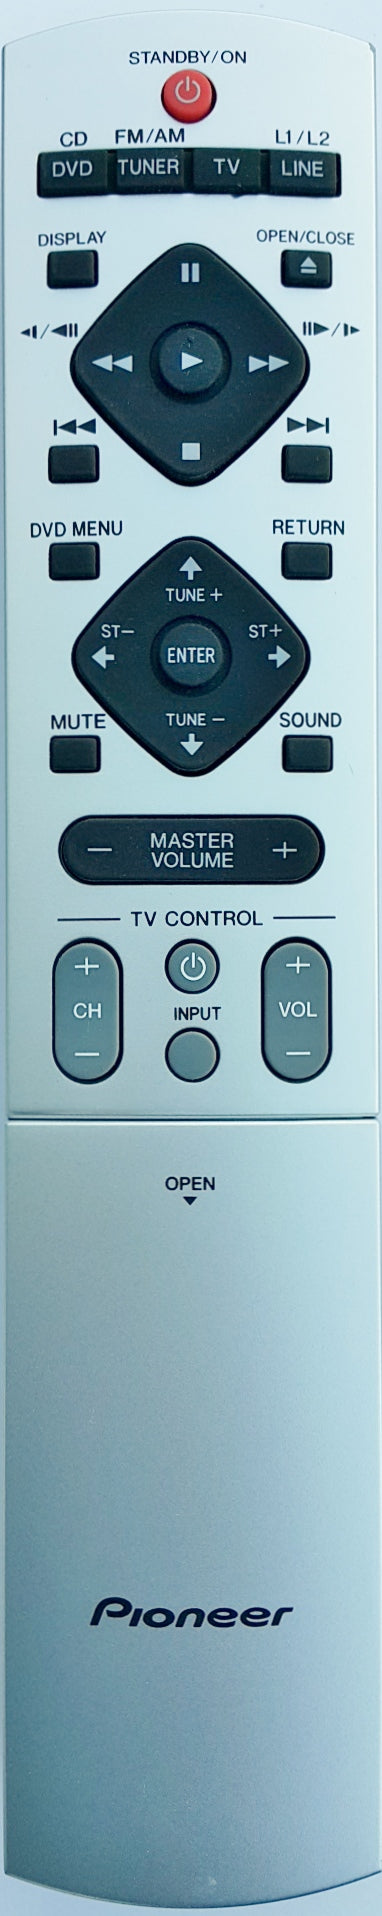 Original Pioneer  remote control  XXD3058  XV-DV222  XV-DV313  XV-DV333  Home theatre - Remote Control Warehouse